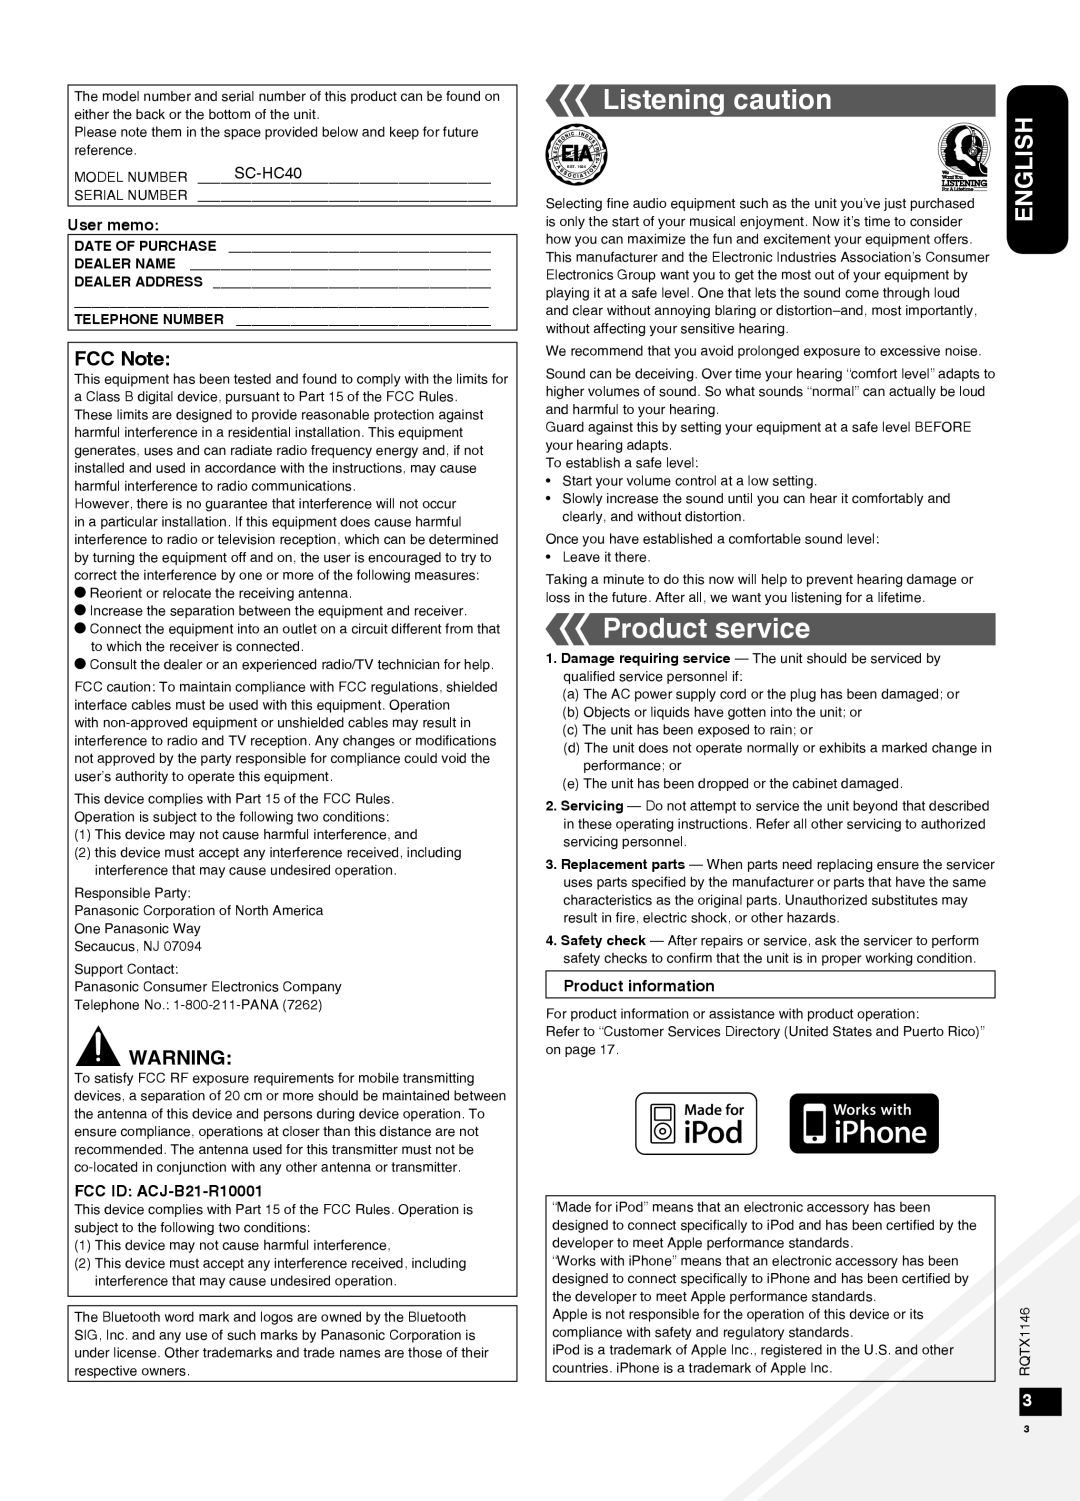 Panasonic SC-HC40 warranty Listening caution, Product service, FCC Note 